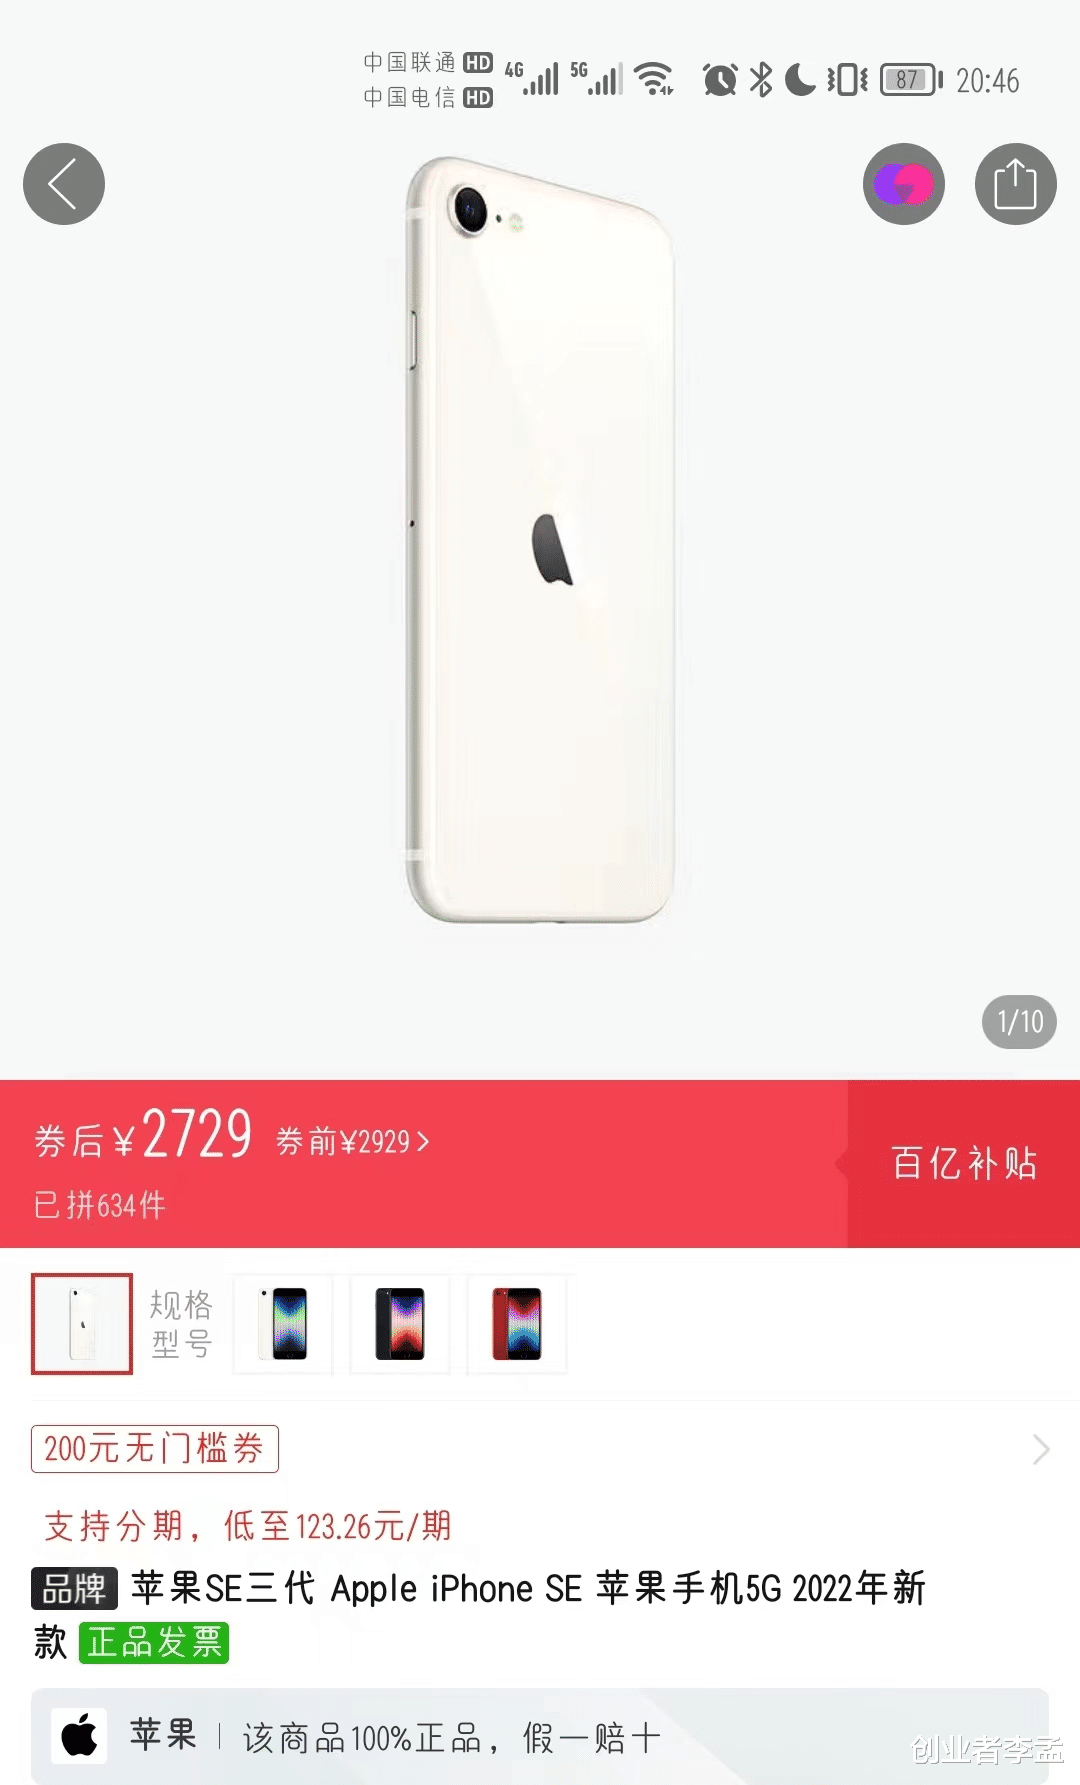 iPhoneSE|如果iPhoneSE3卖1500元，你会考虑购买吗？